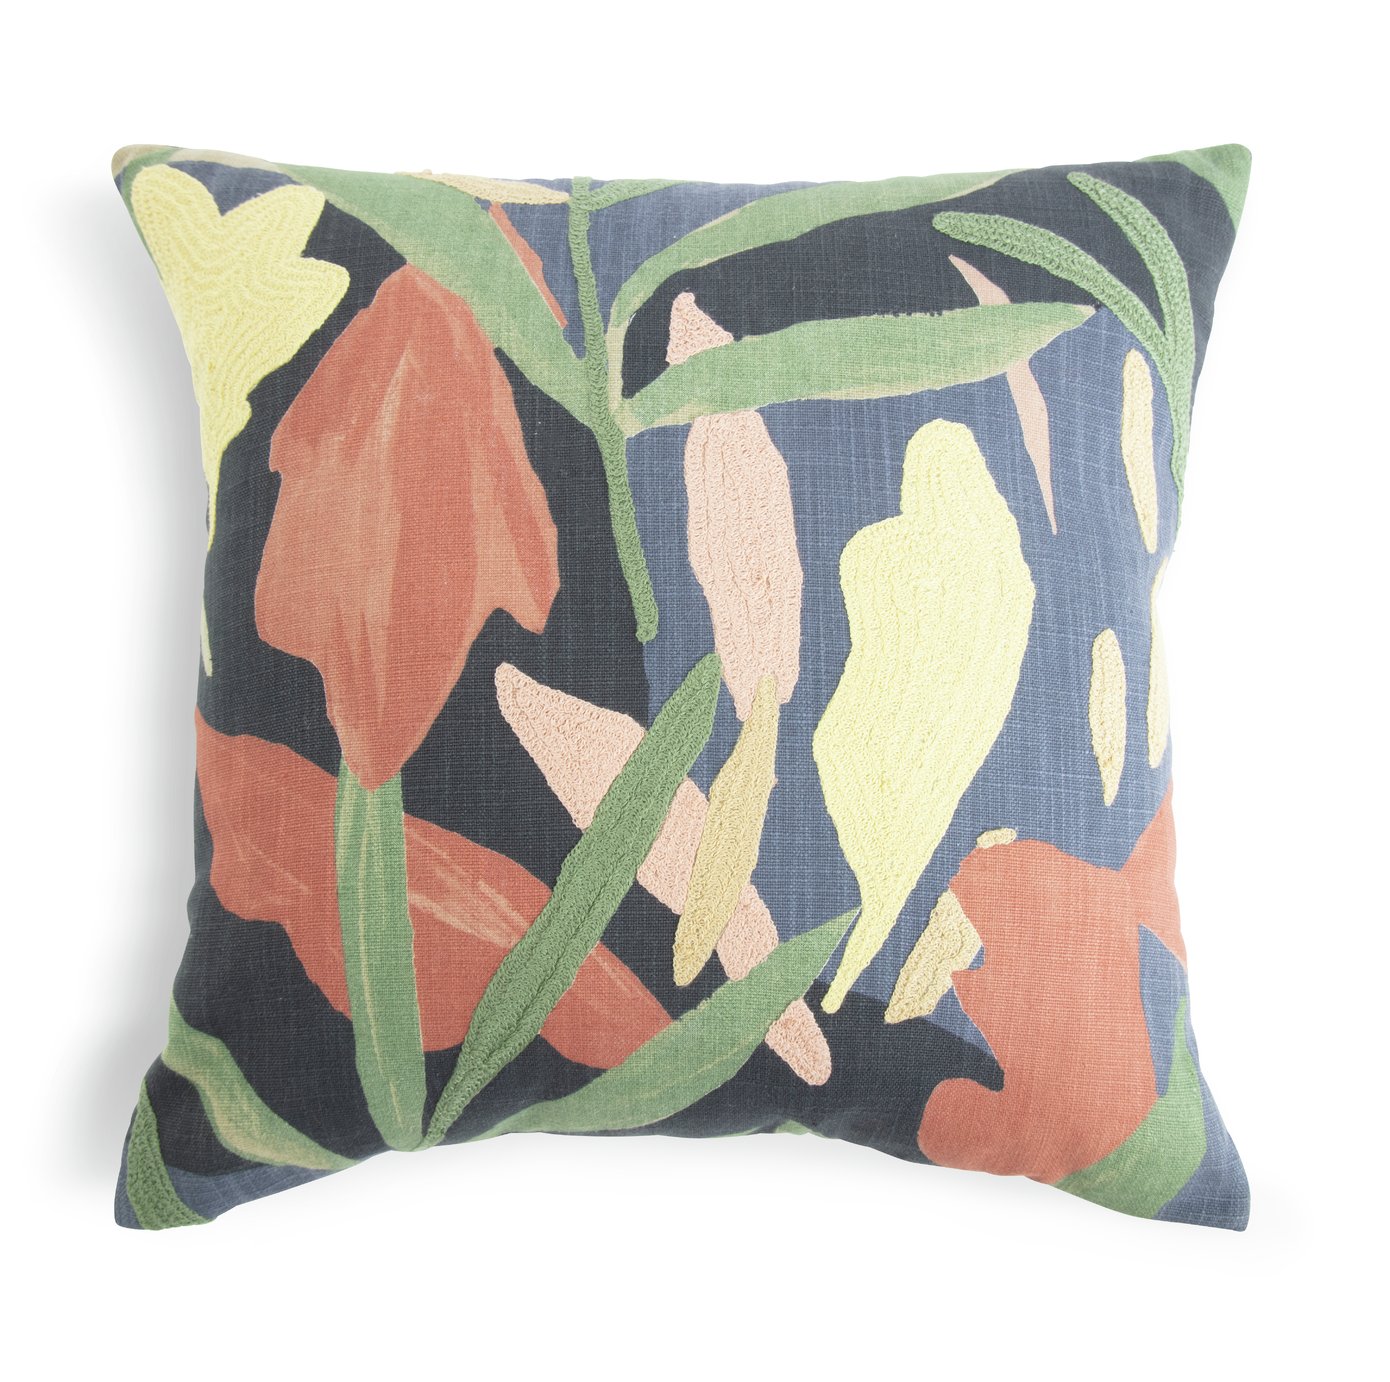 Habitat Embroidered Floral Cushion - Multicolor - 43X43cm